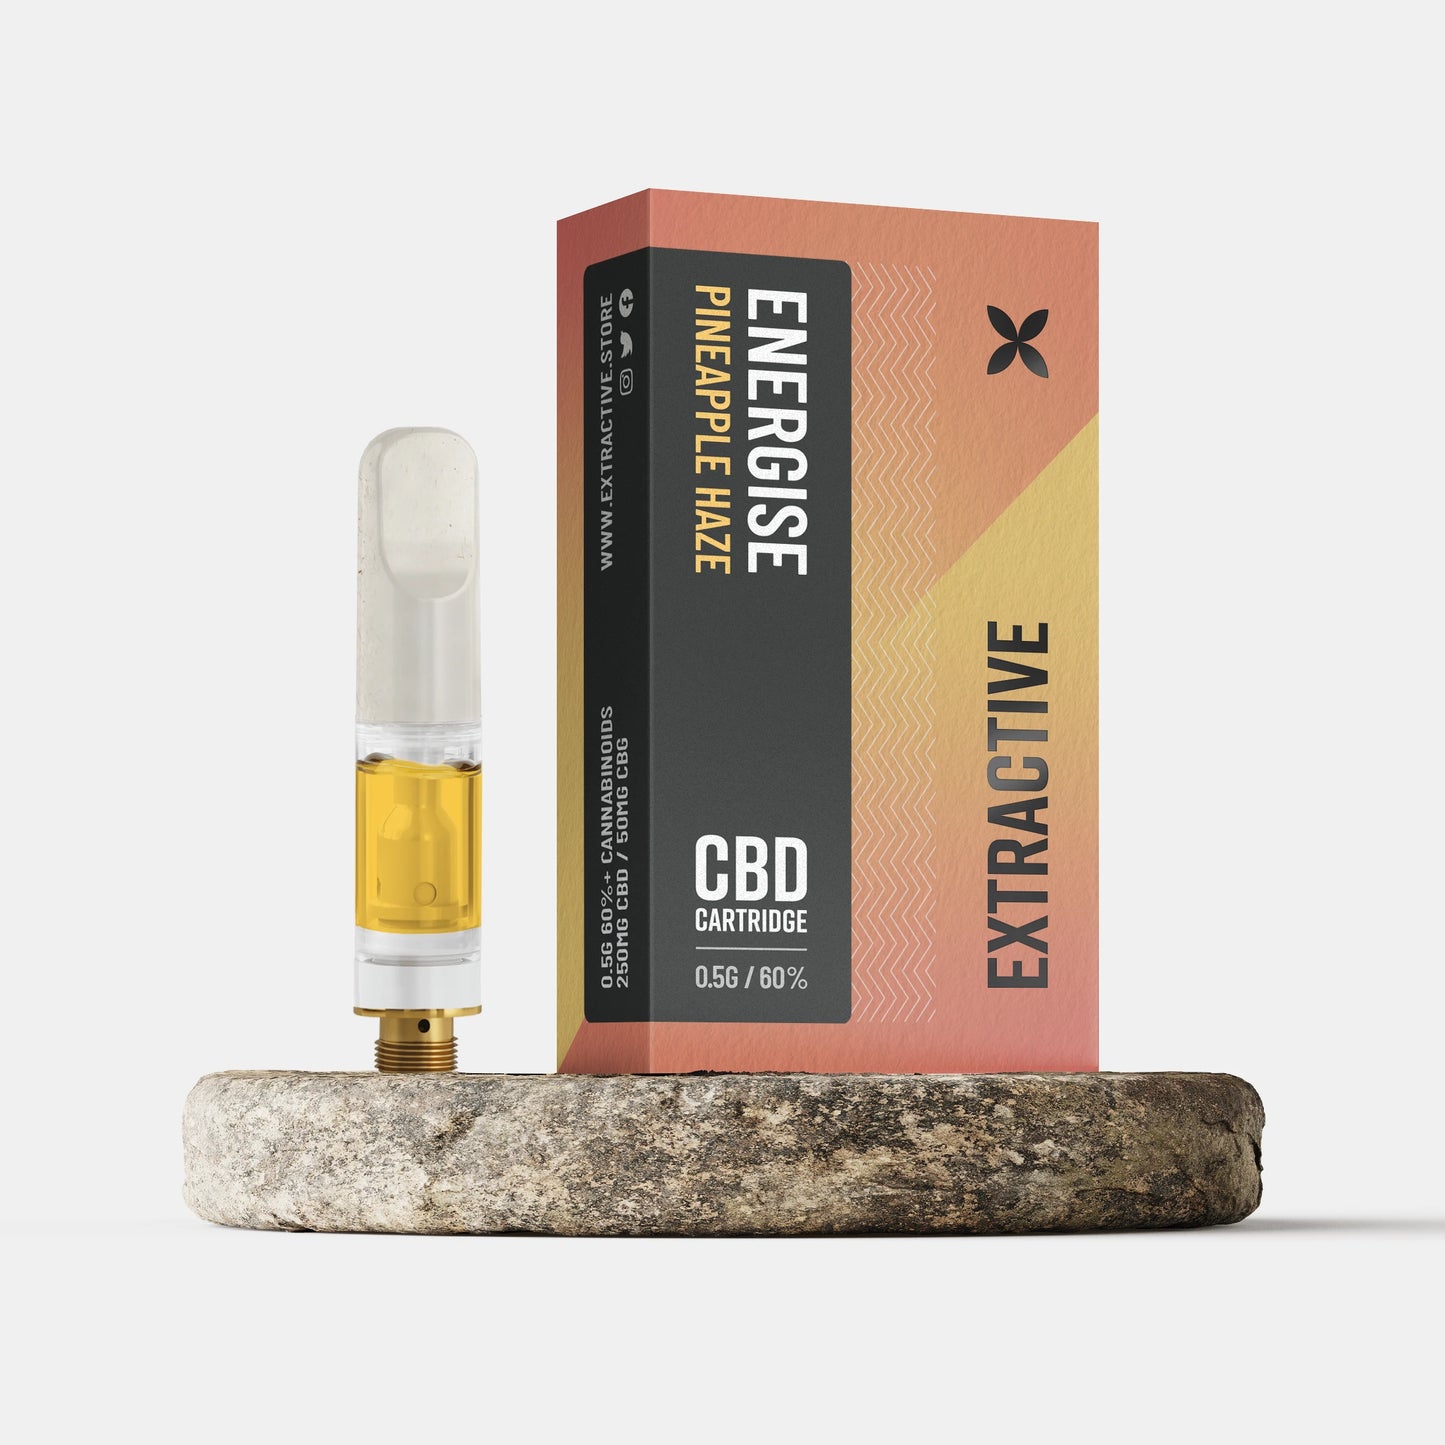 Energise- CBD Vape Cartridge - 0.5g Uncut Oil - Artisan - Pineapple Haze - 60%+ Cannabinoids